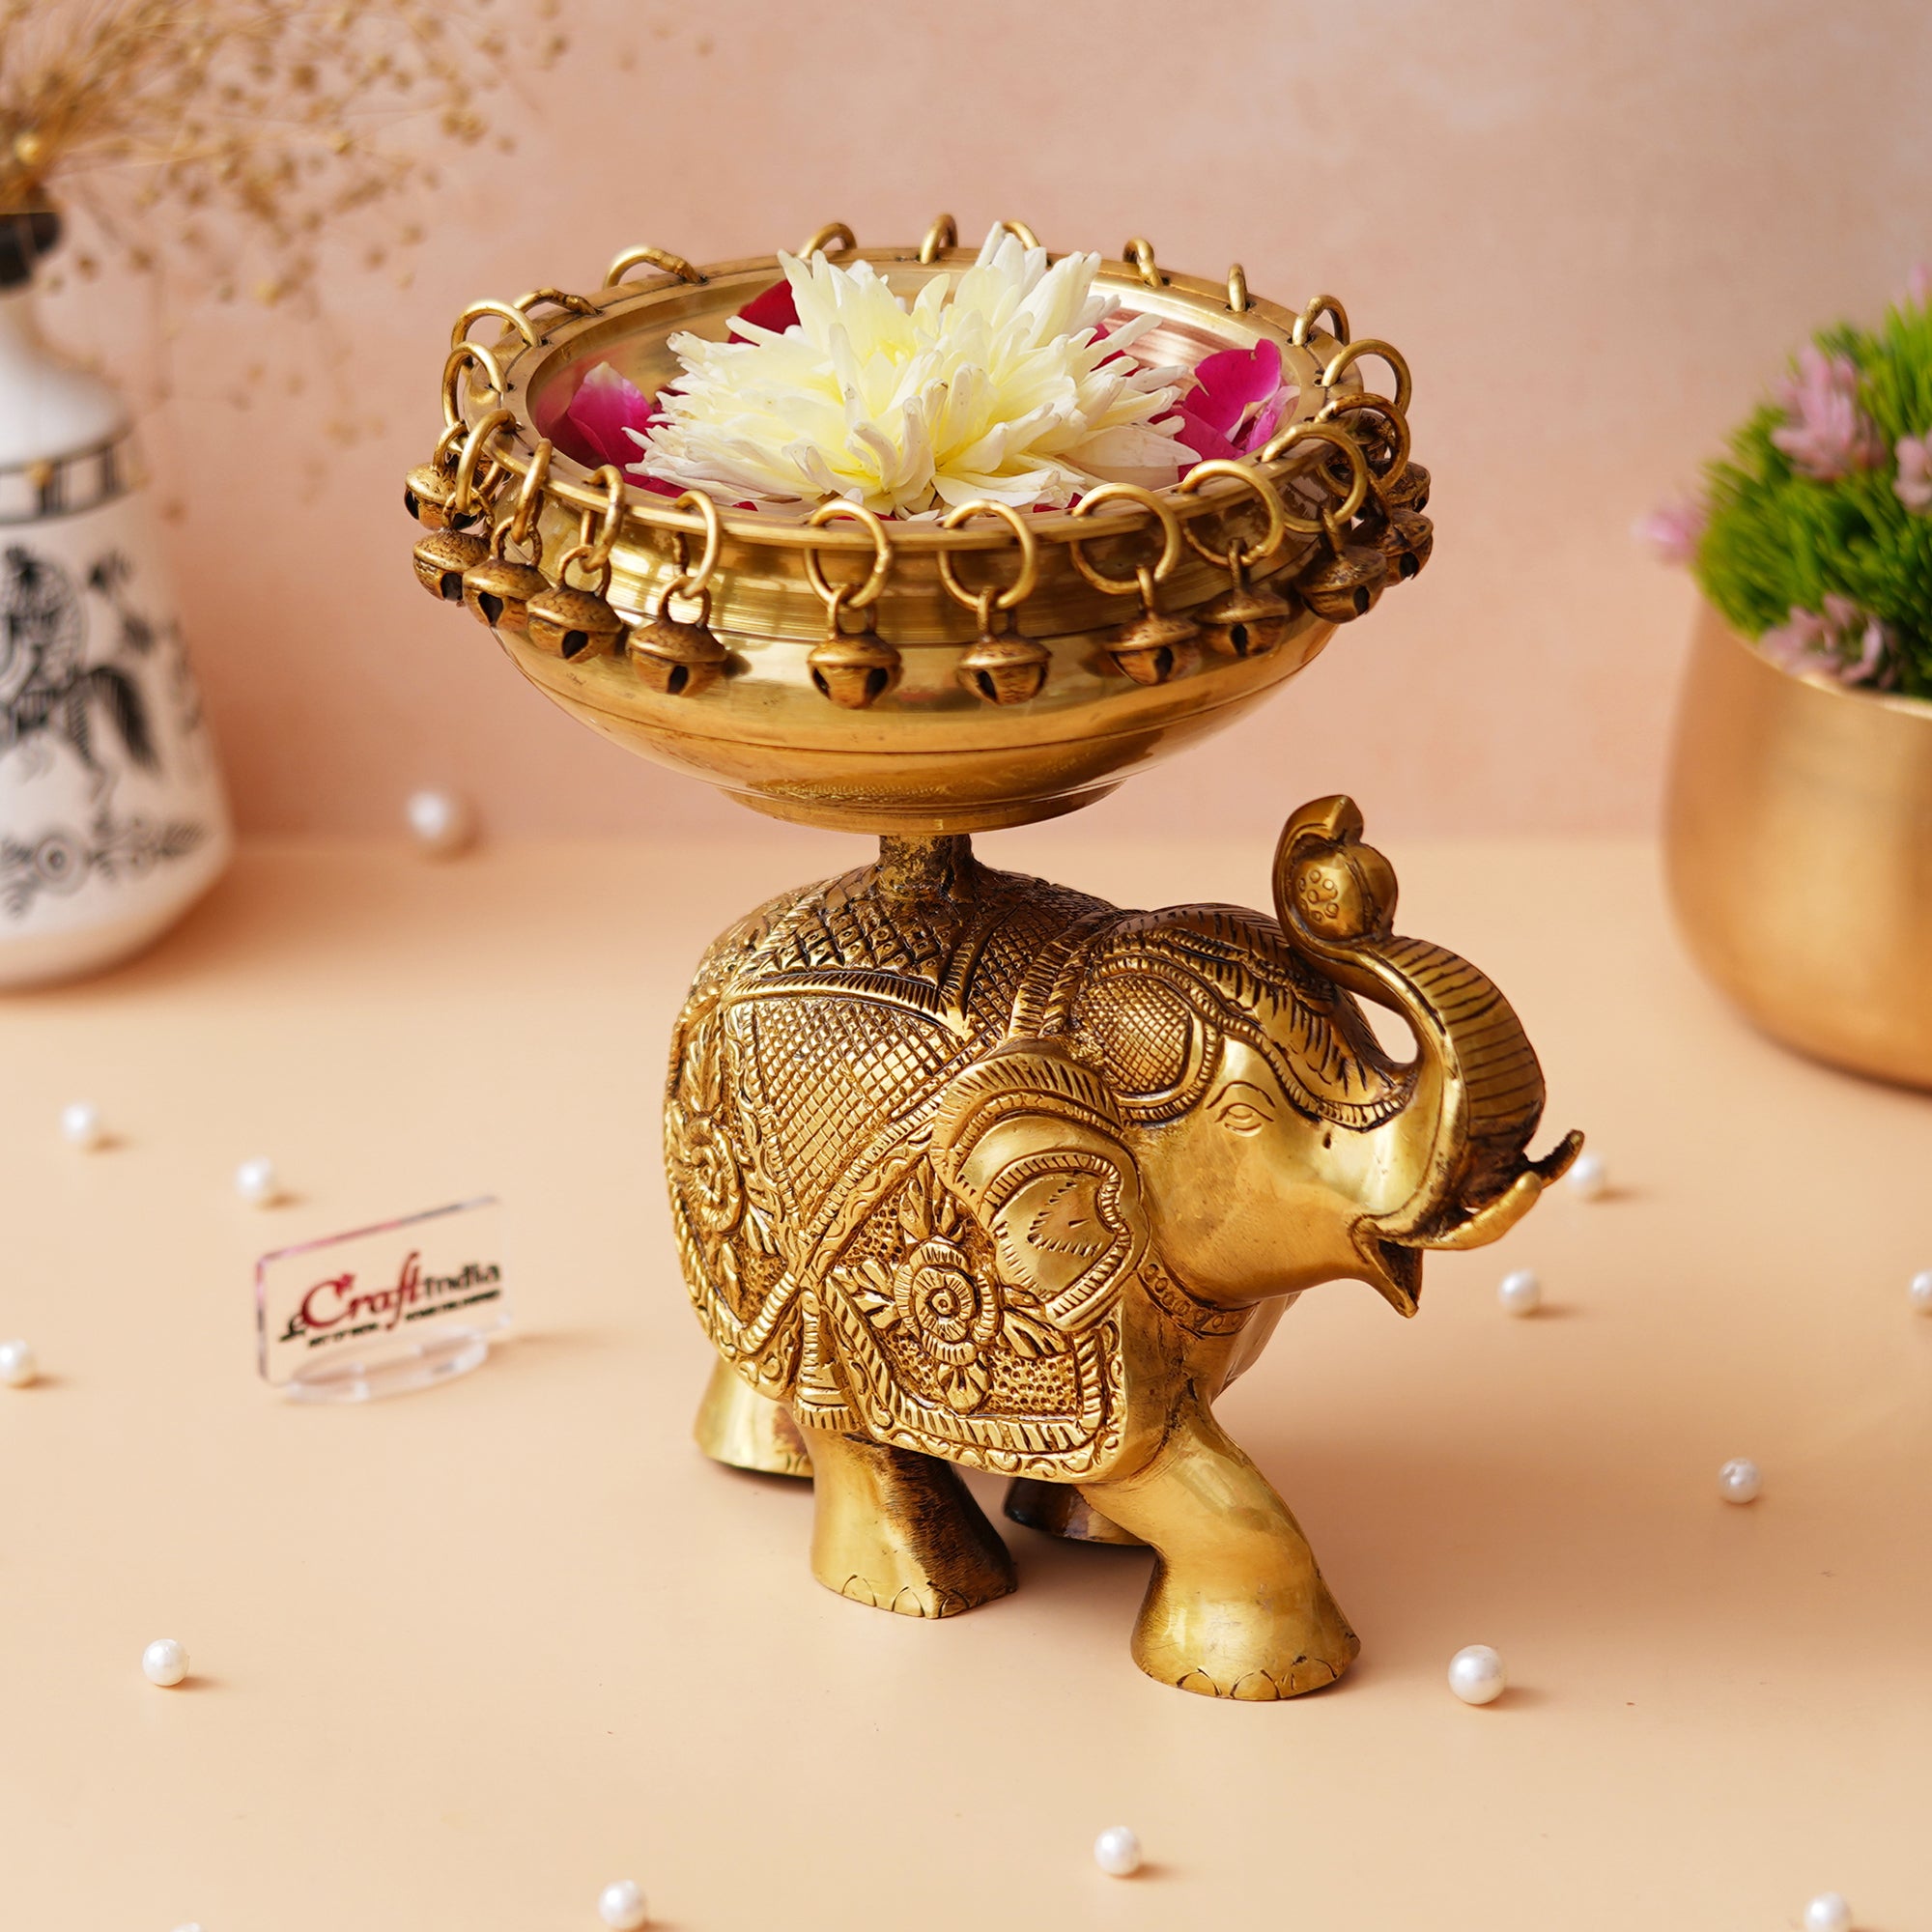 Golden Brass Urli on Elephant Statue with Bells for Floating Flowers - Ethnic Design Decorative Showpiece for Home & Office Decor, Diwali Decoration - Gift for Housewarming, Navratri Festival 1